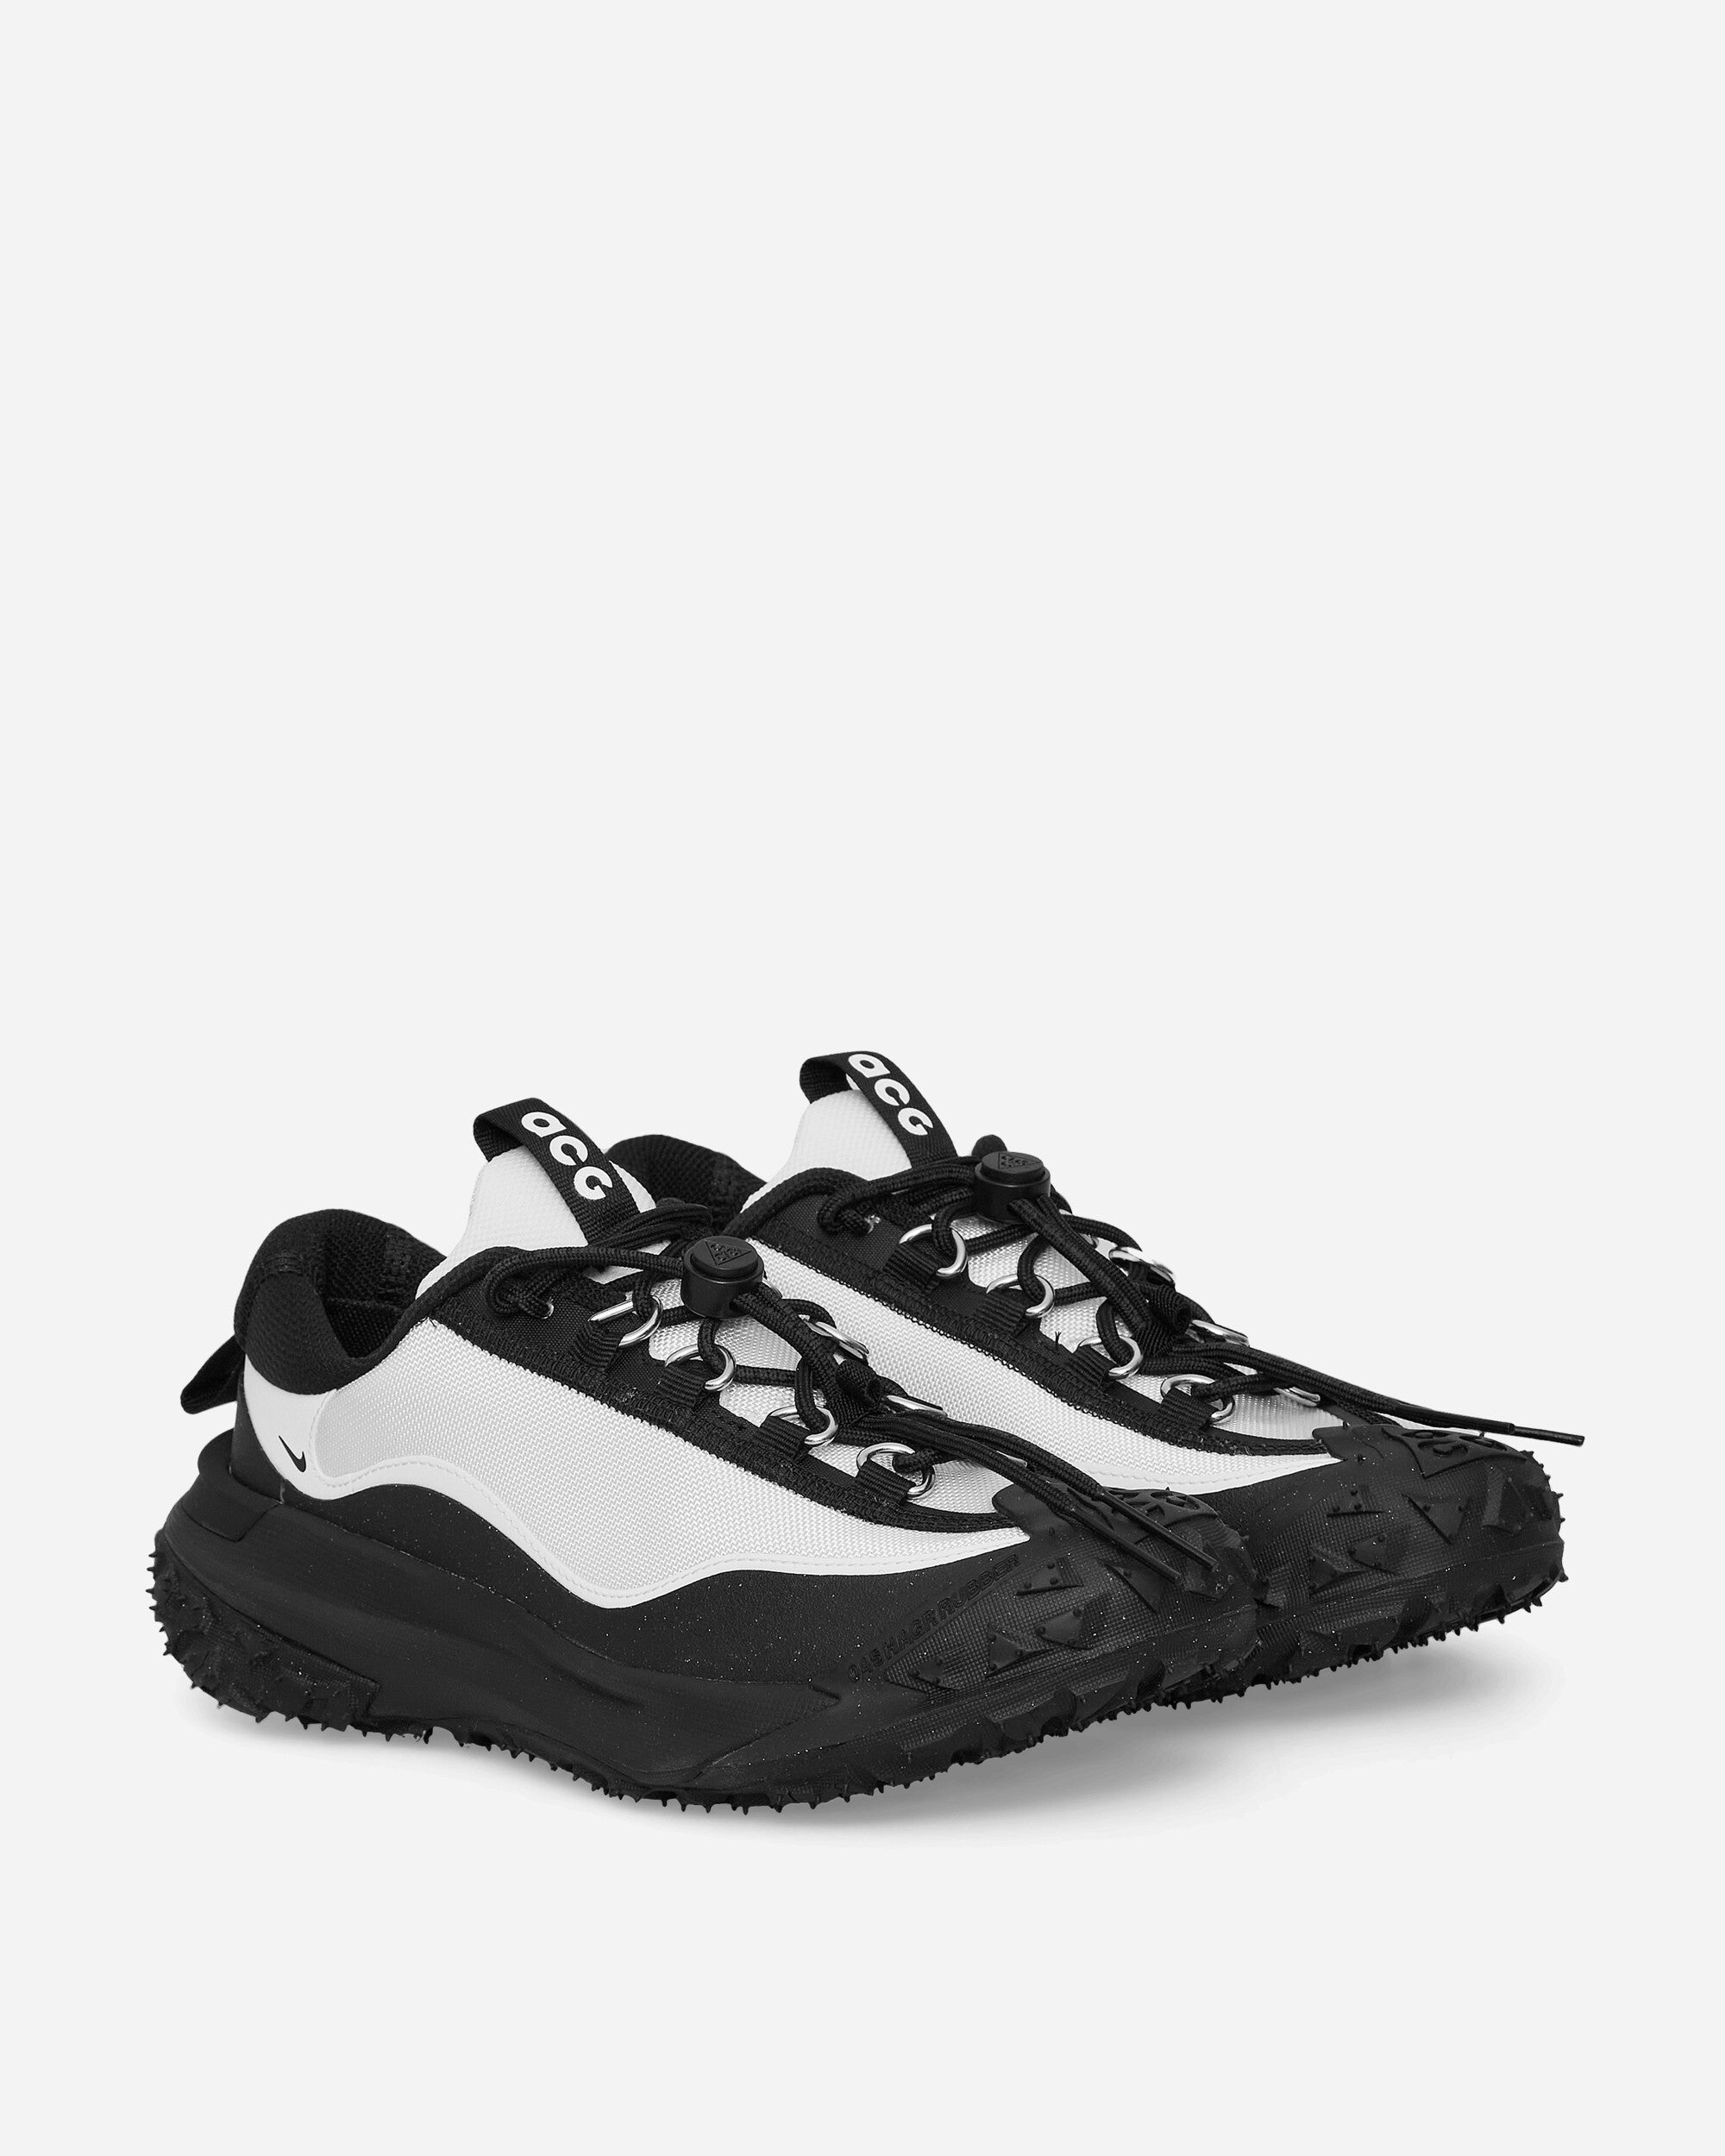 Nike ACG Mountain Fly 2 Low SP Sneakers Black / White